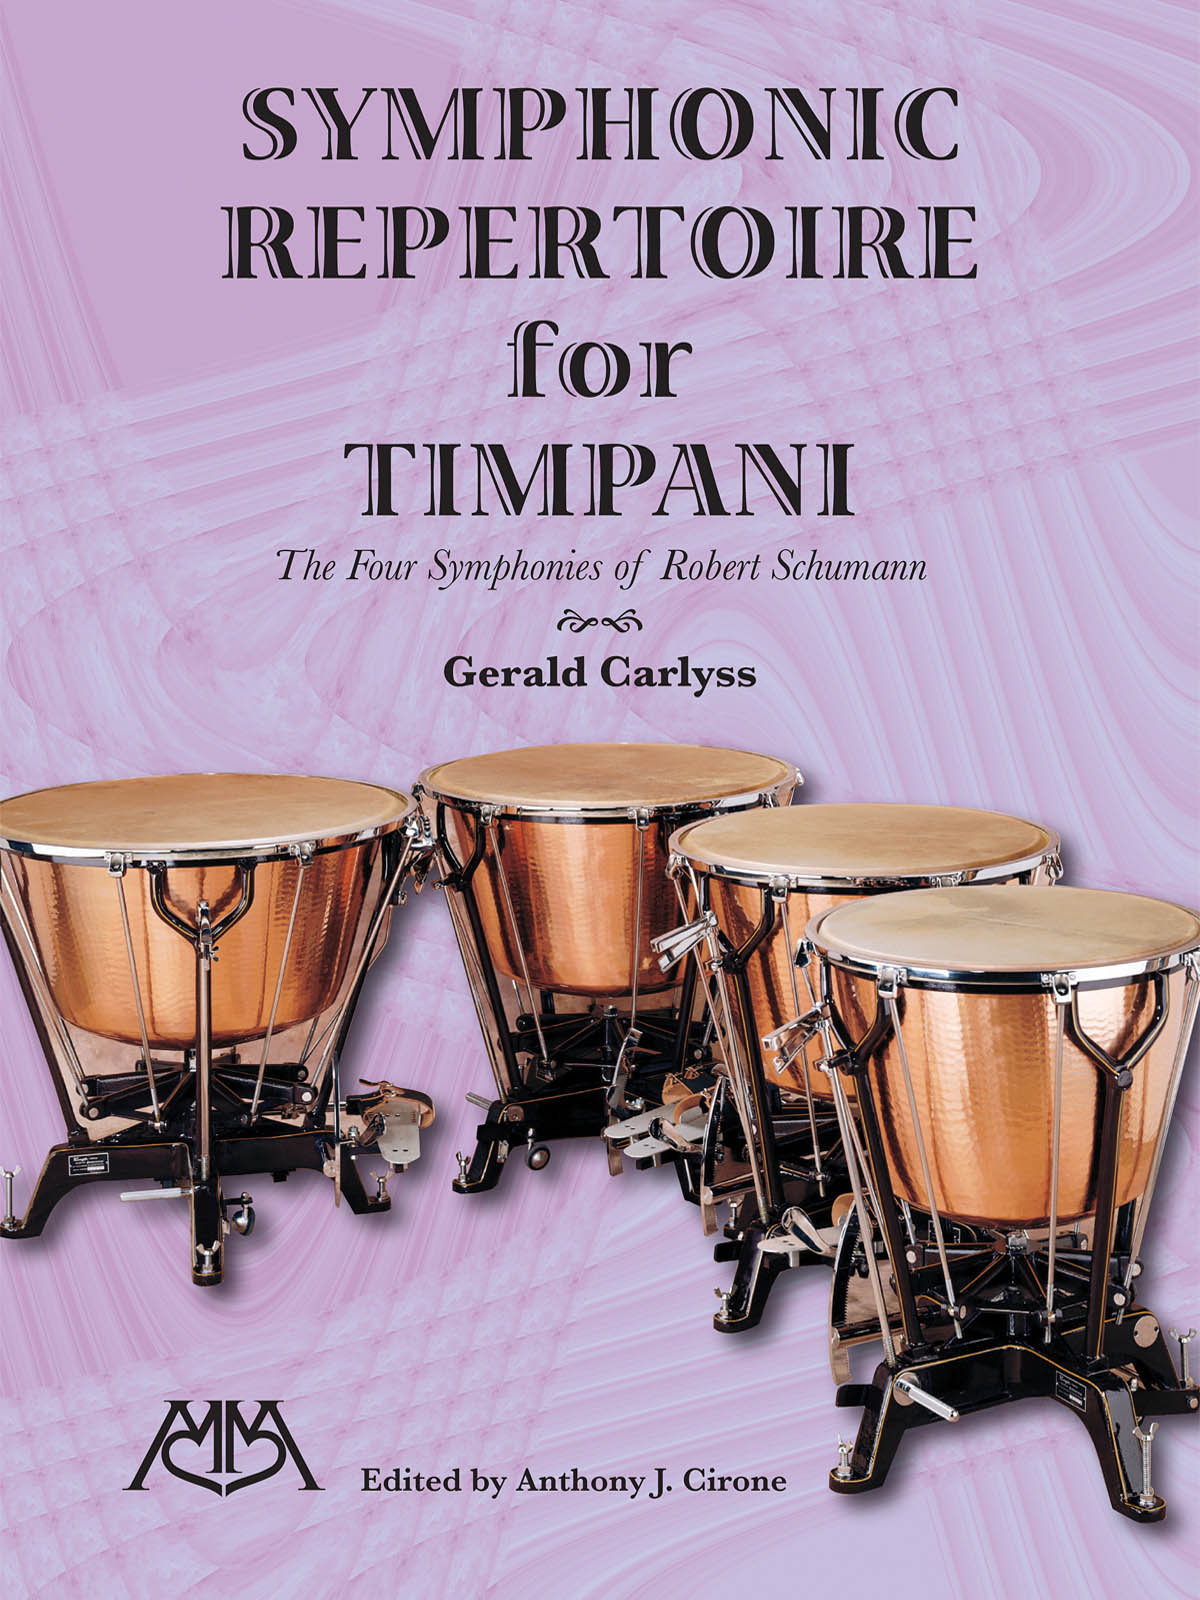 Symphonic Repertoire for Timpani - The 4 symphonies of Schumann - noty pro timpány